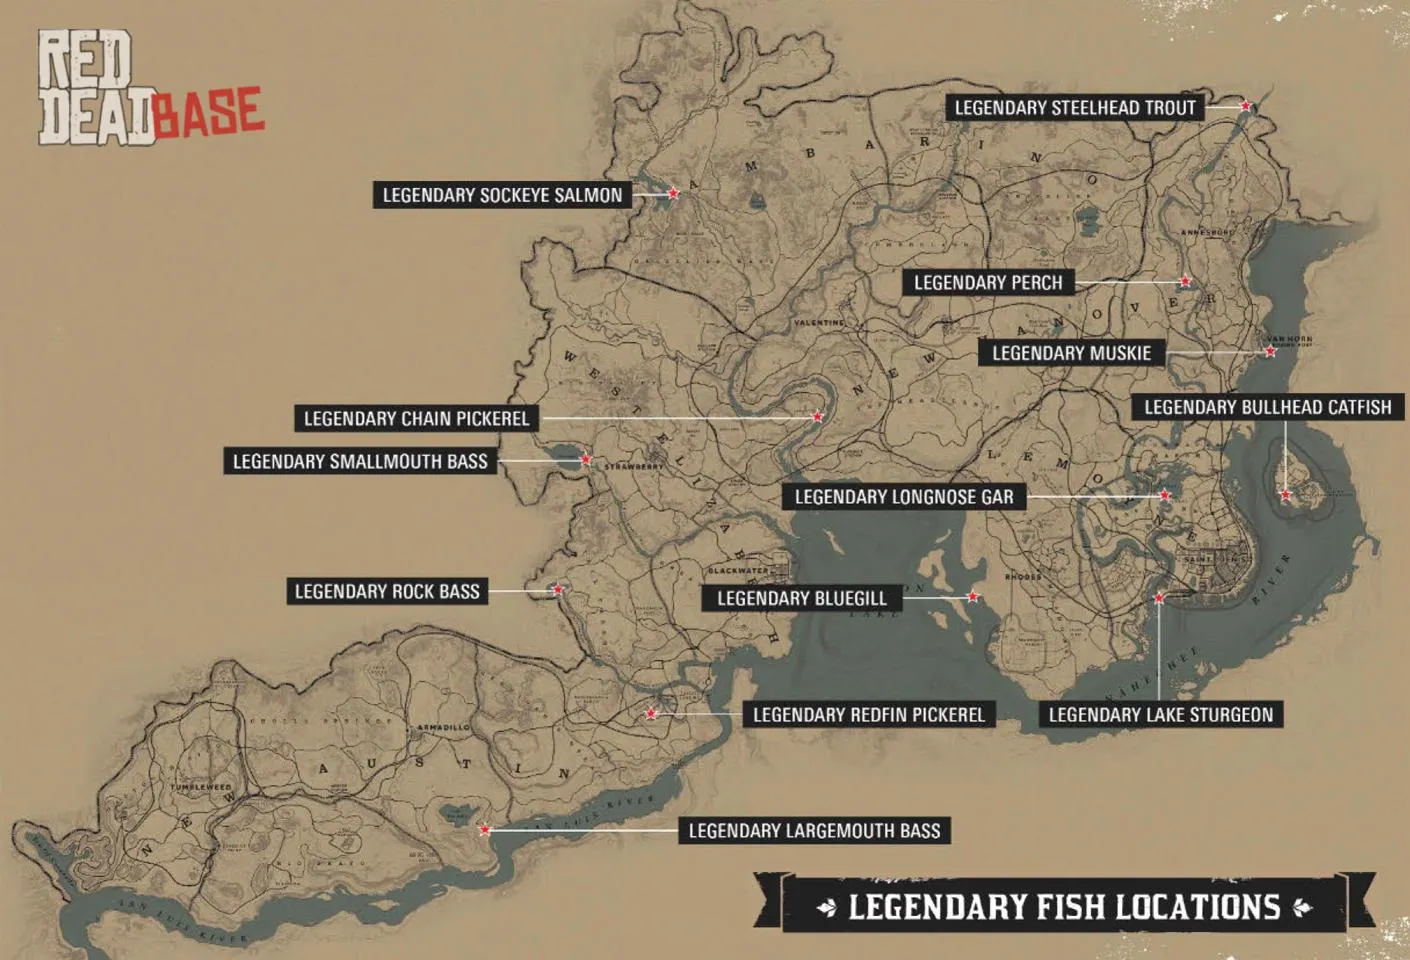 Legendary Redfin Pickerel - Map Location in RDR2